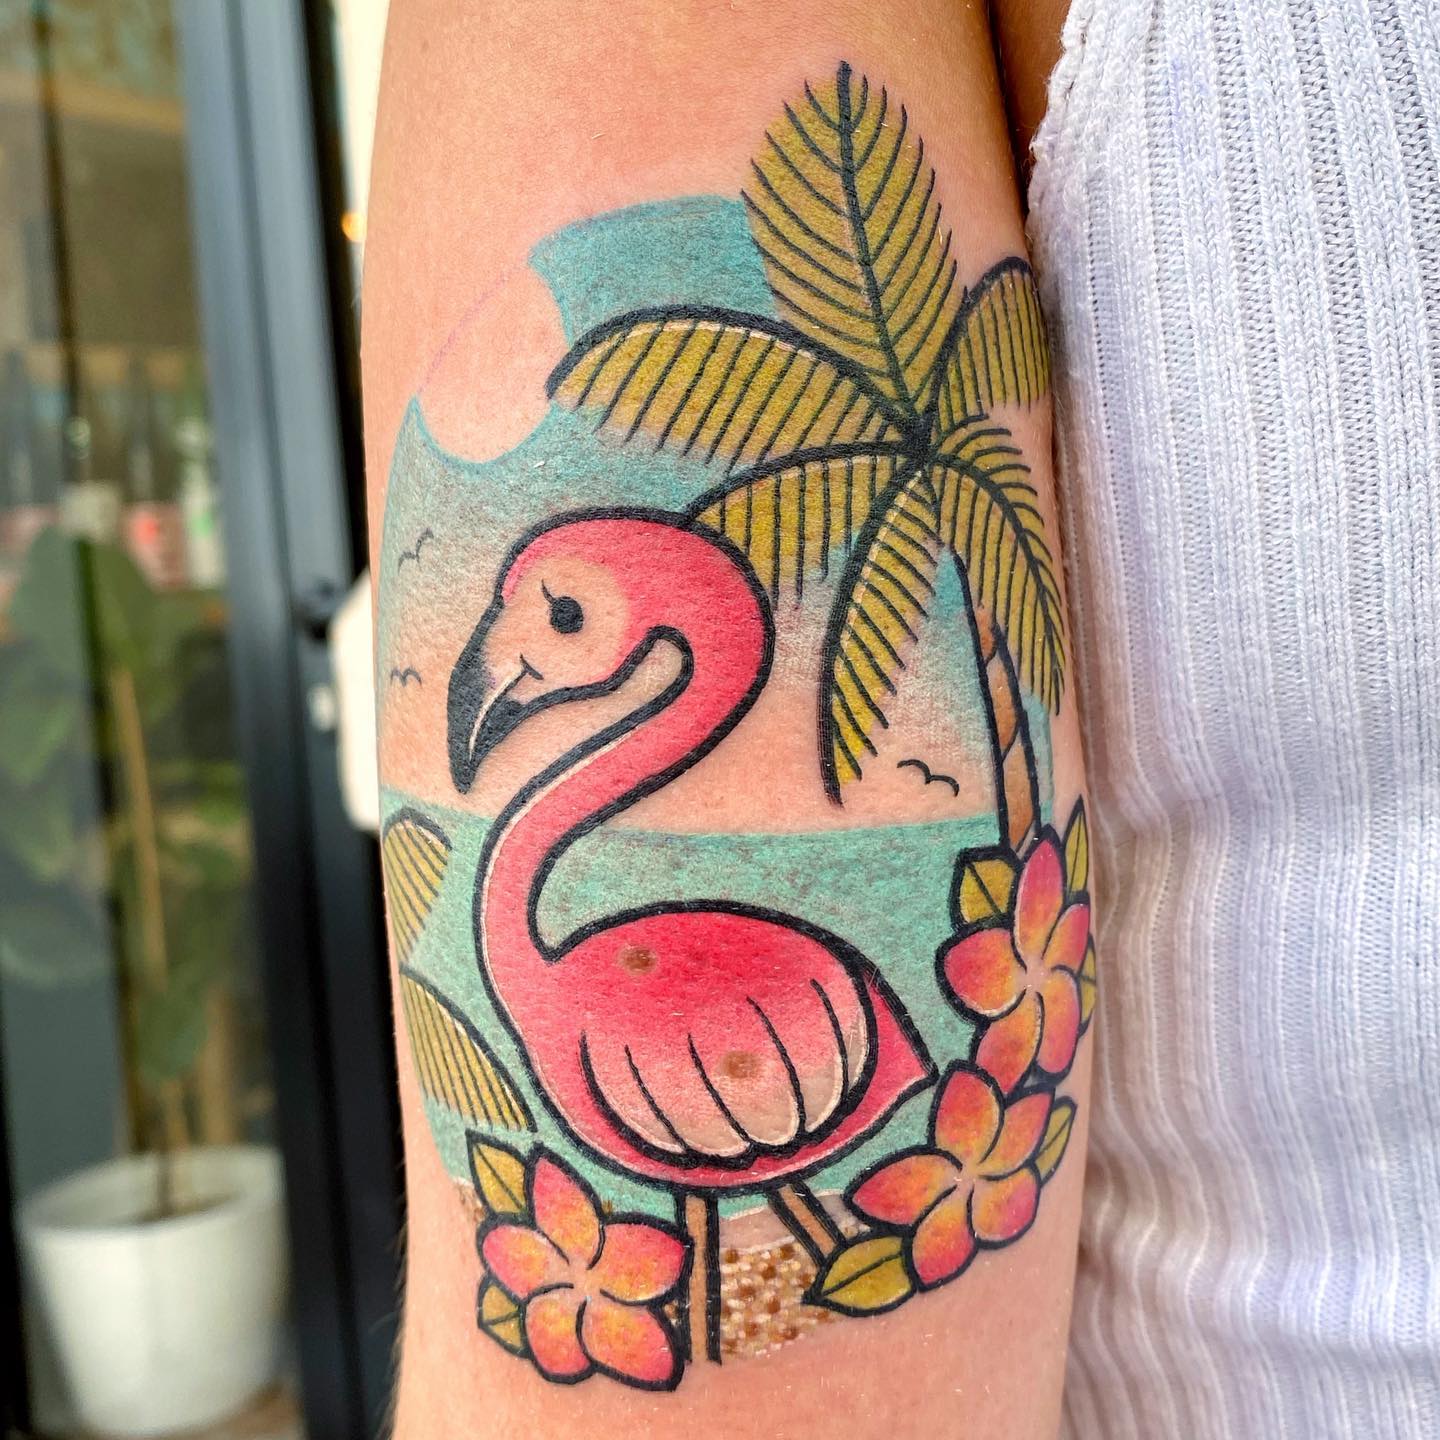 Tatuaje de palmera y flamenco